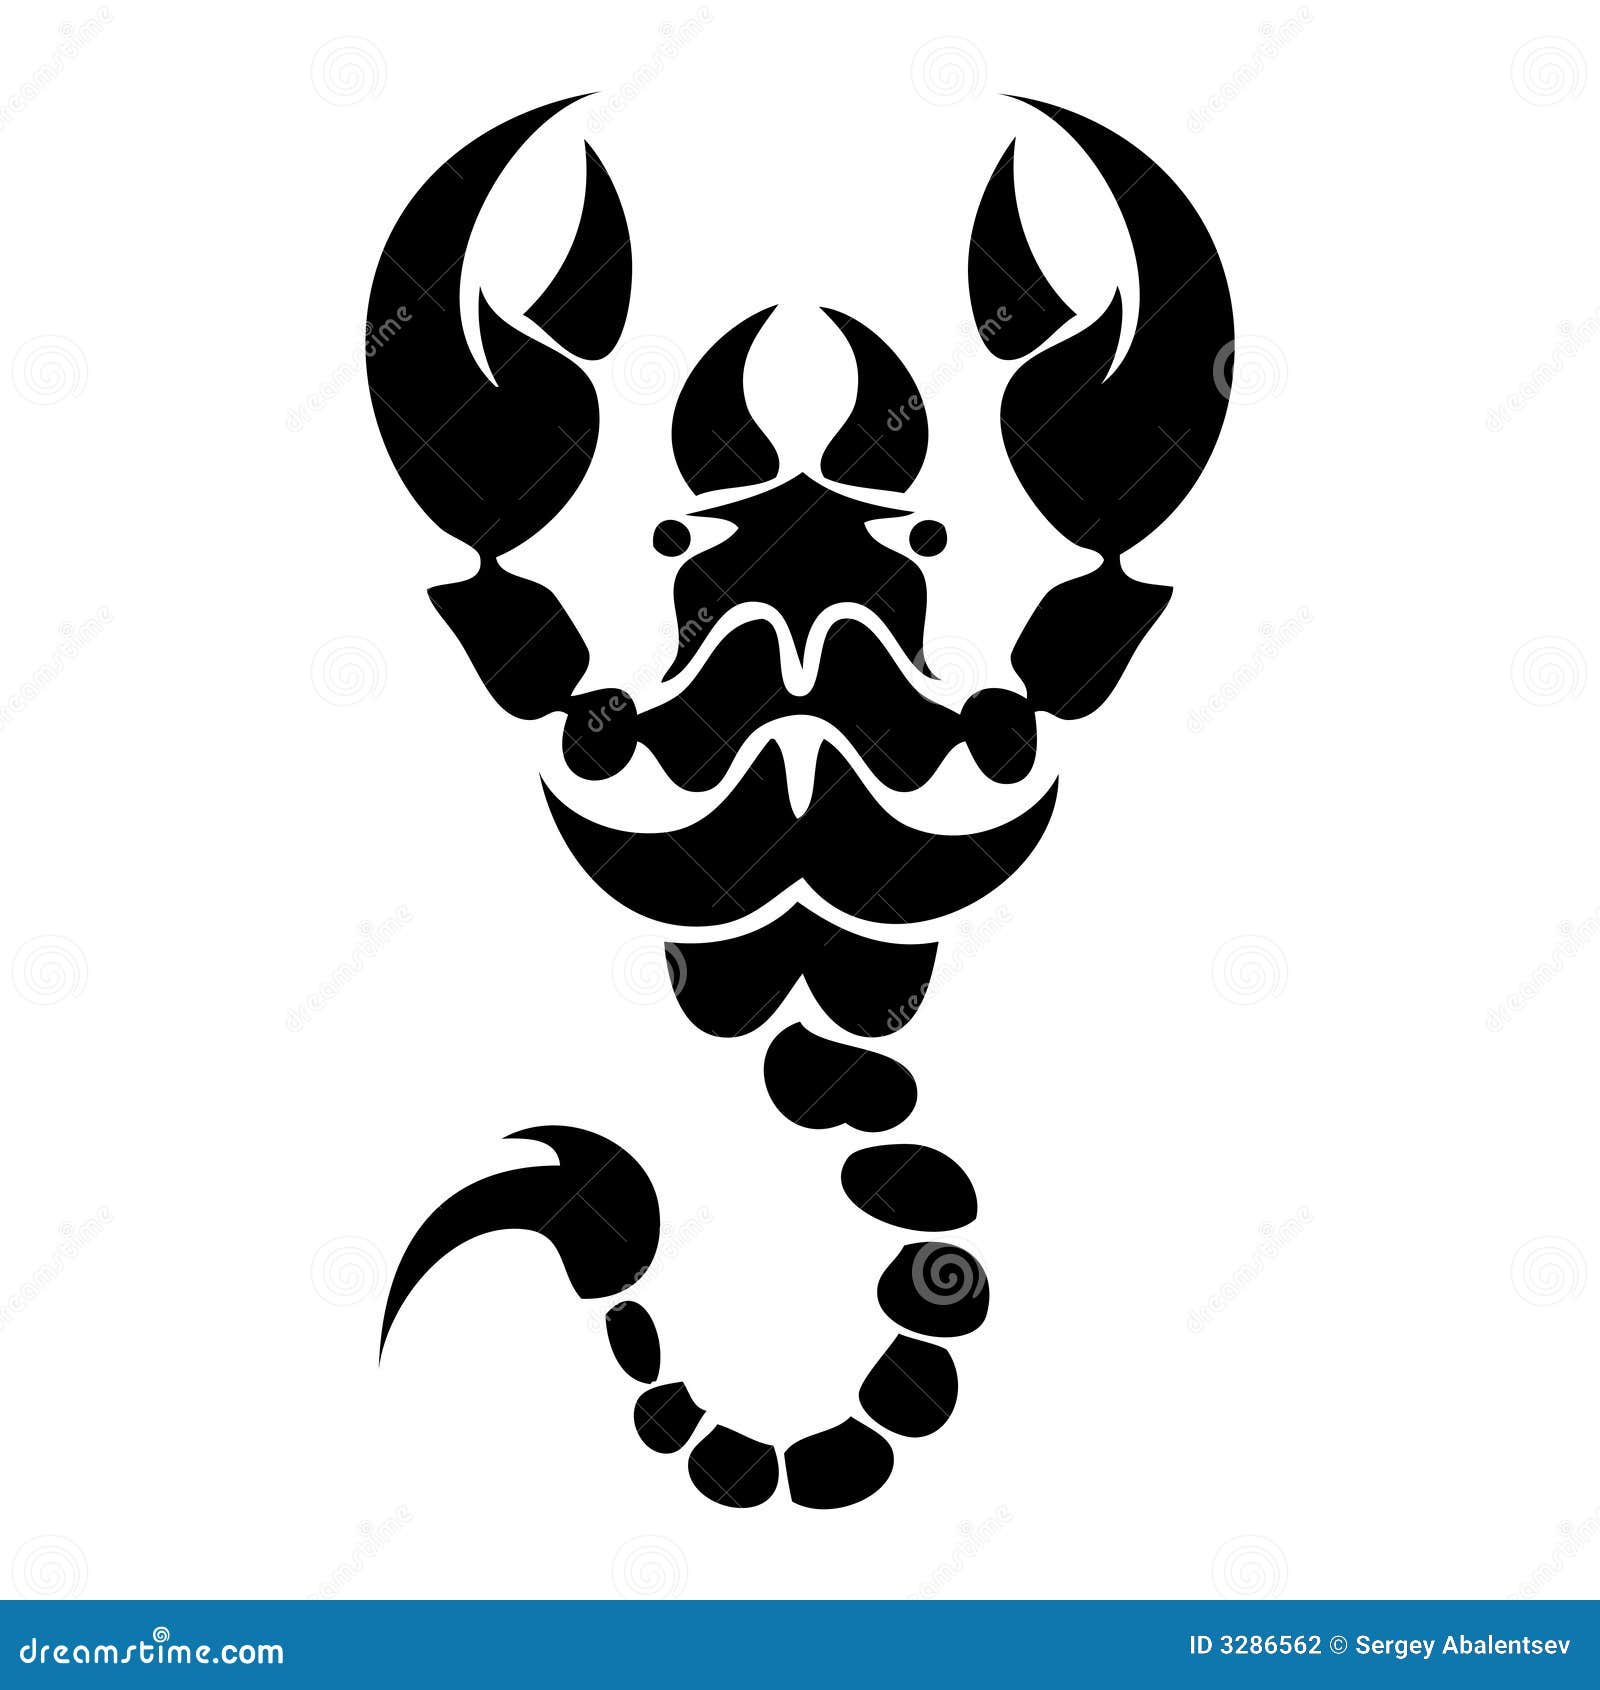 https://thumbs.dreamstime.com/z/scorpion-tatoo-3286562.jpg